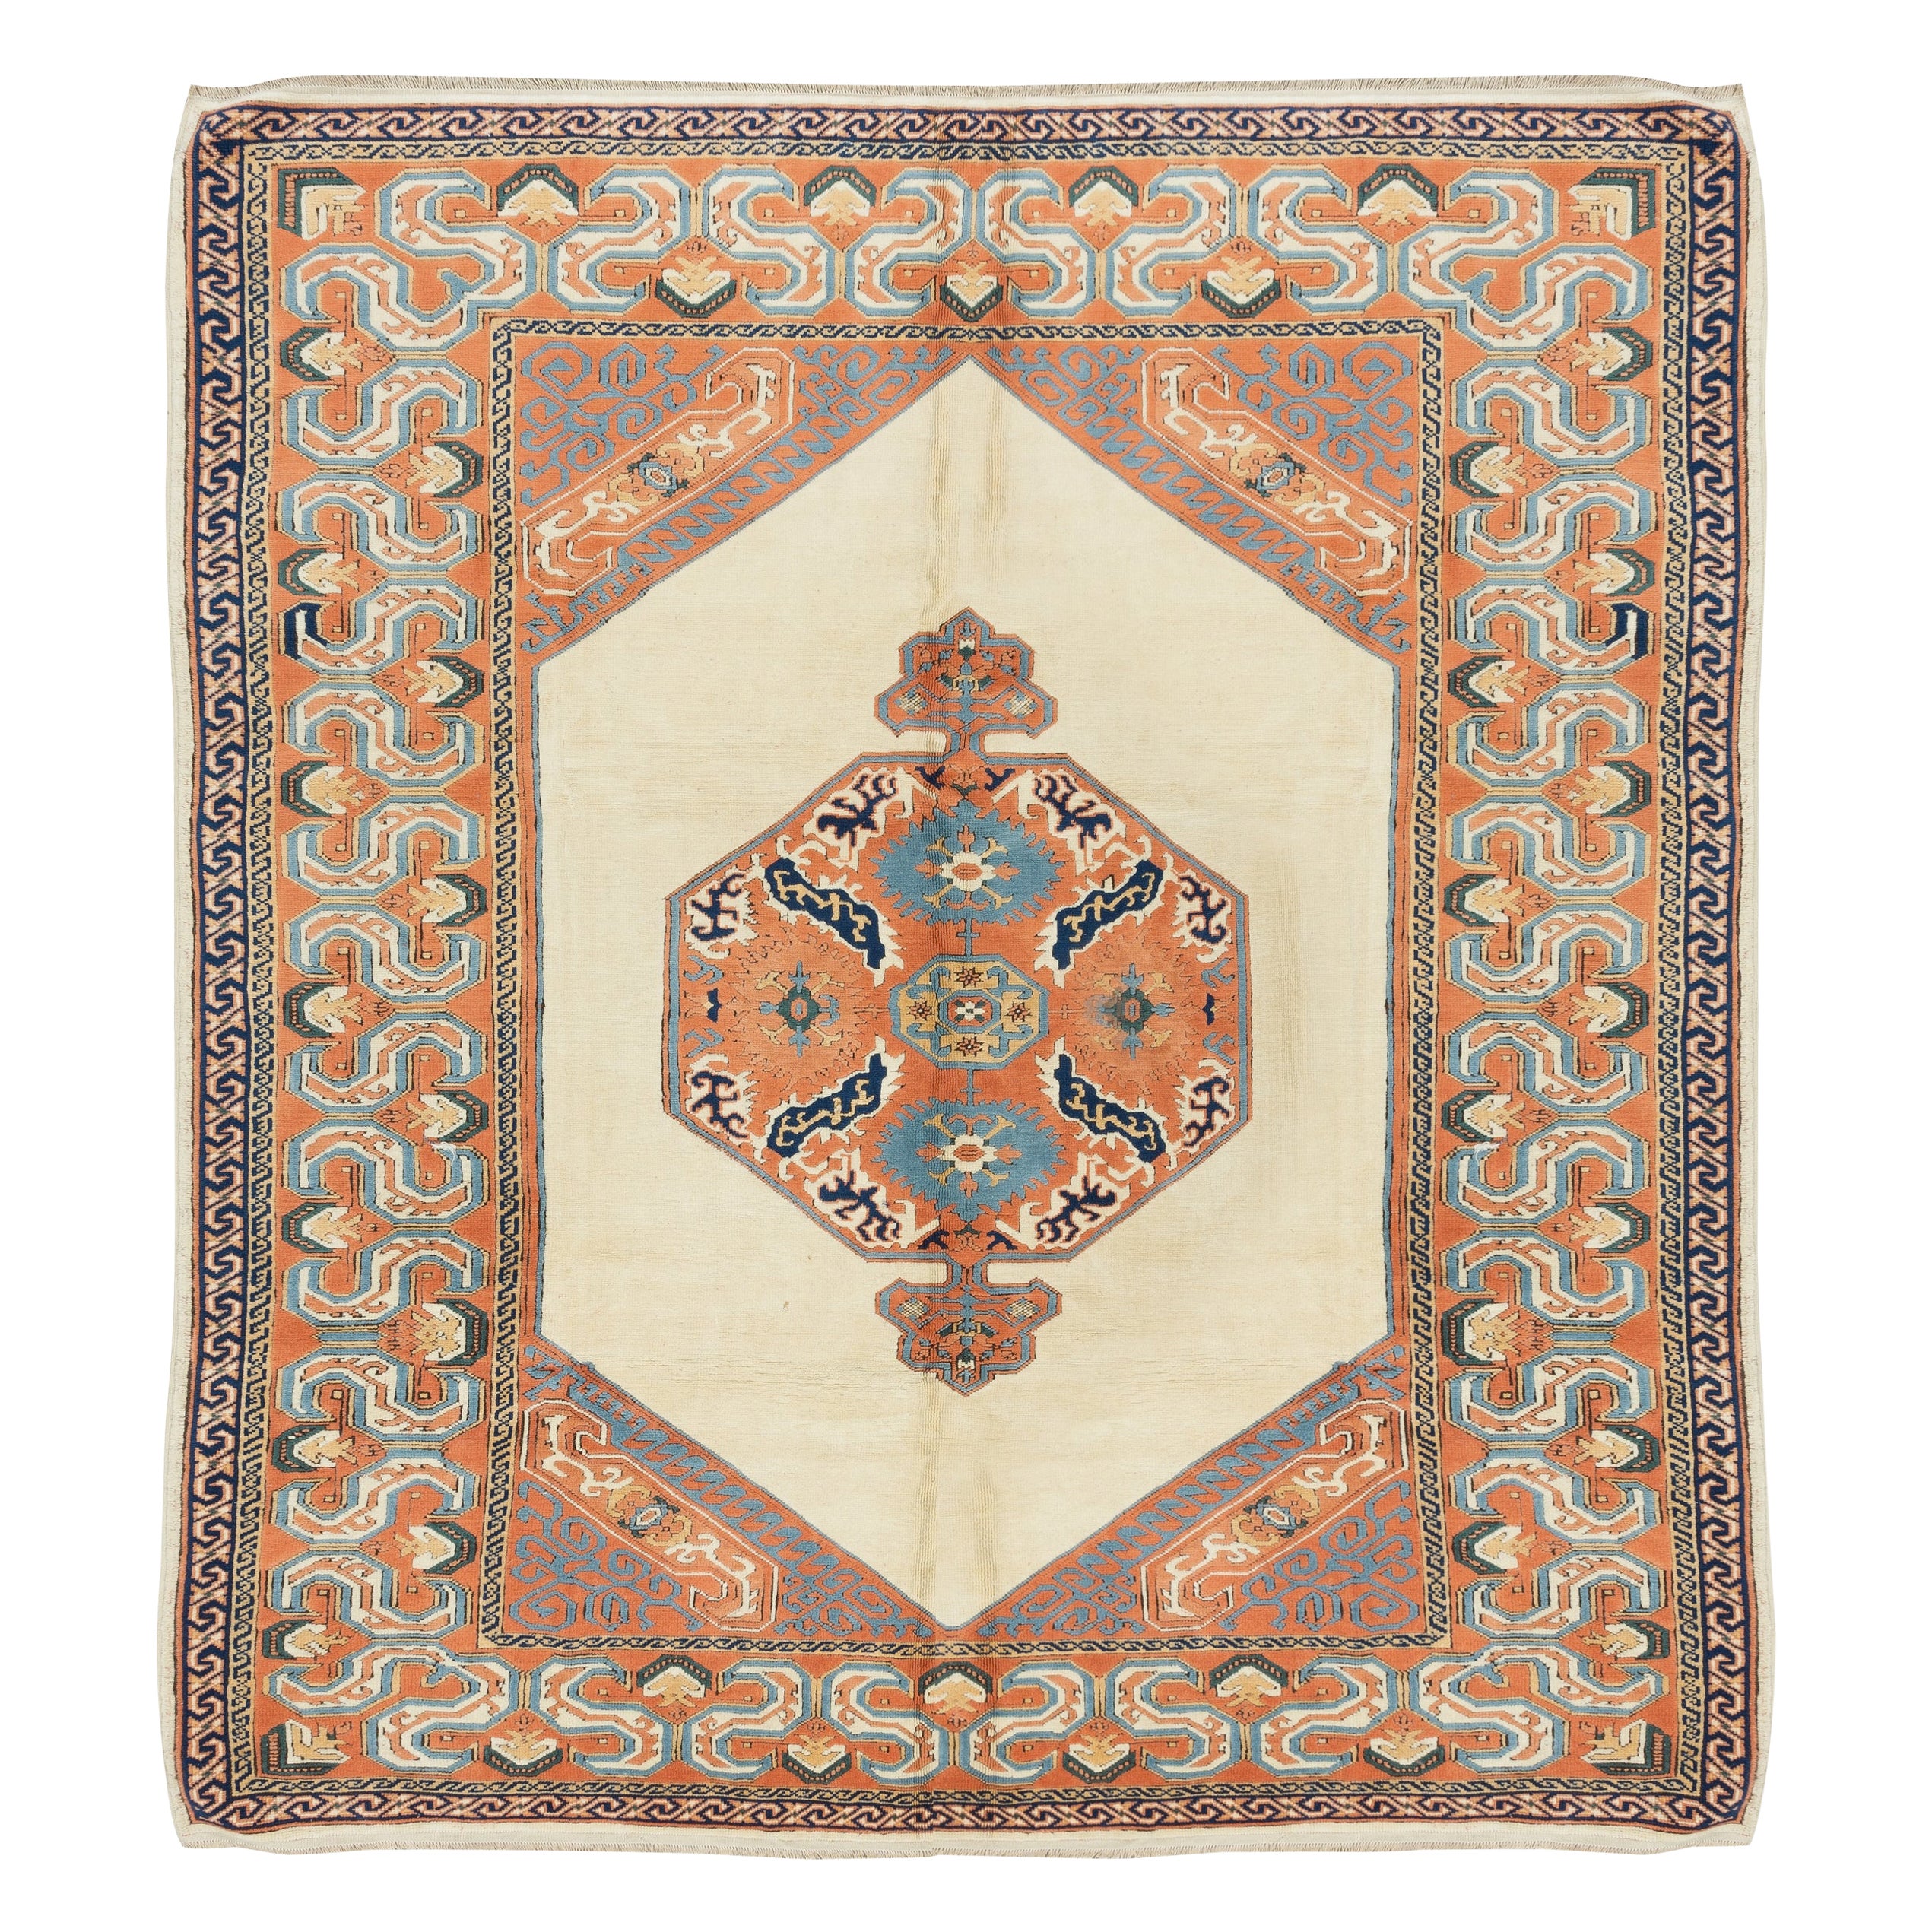 8.3x9.8 Ft Handmade Turkish Rug, Modern Decorative Carpet, 100% Wool (tapis turc fait main, 100% laine)